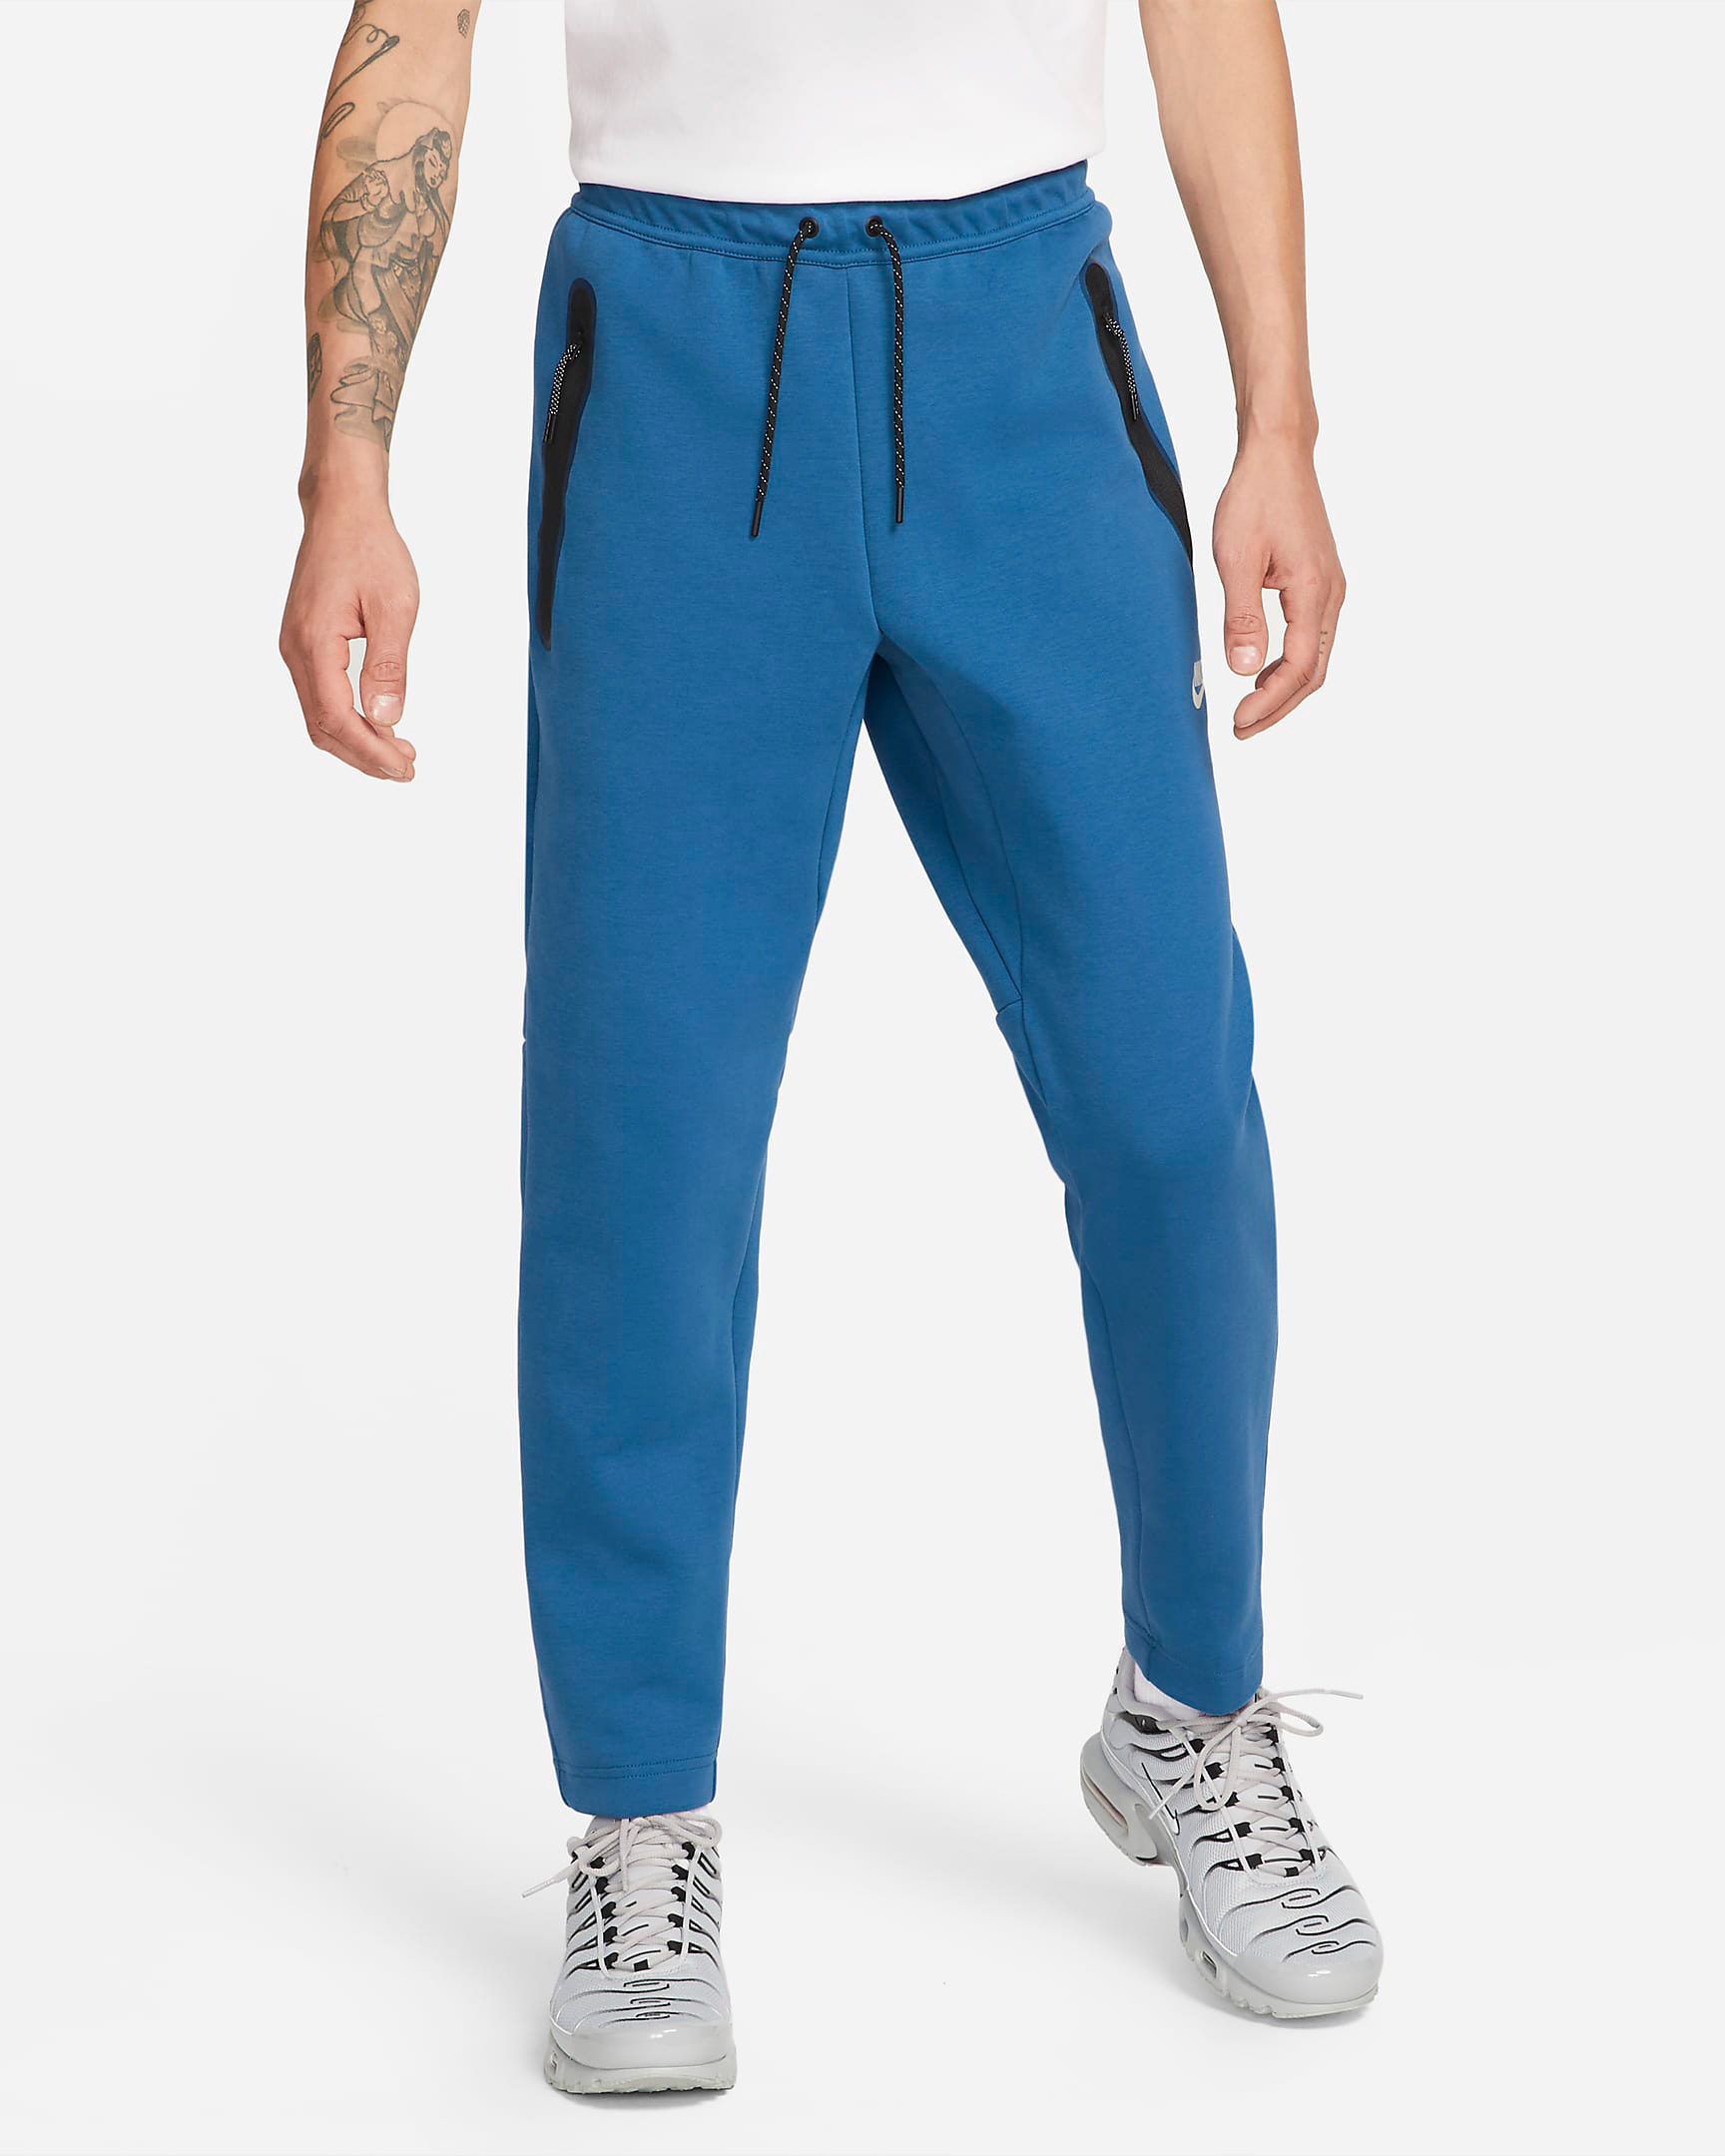 nike-tech-fleece-pants-dark-marina-blue